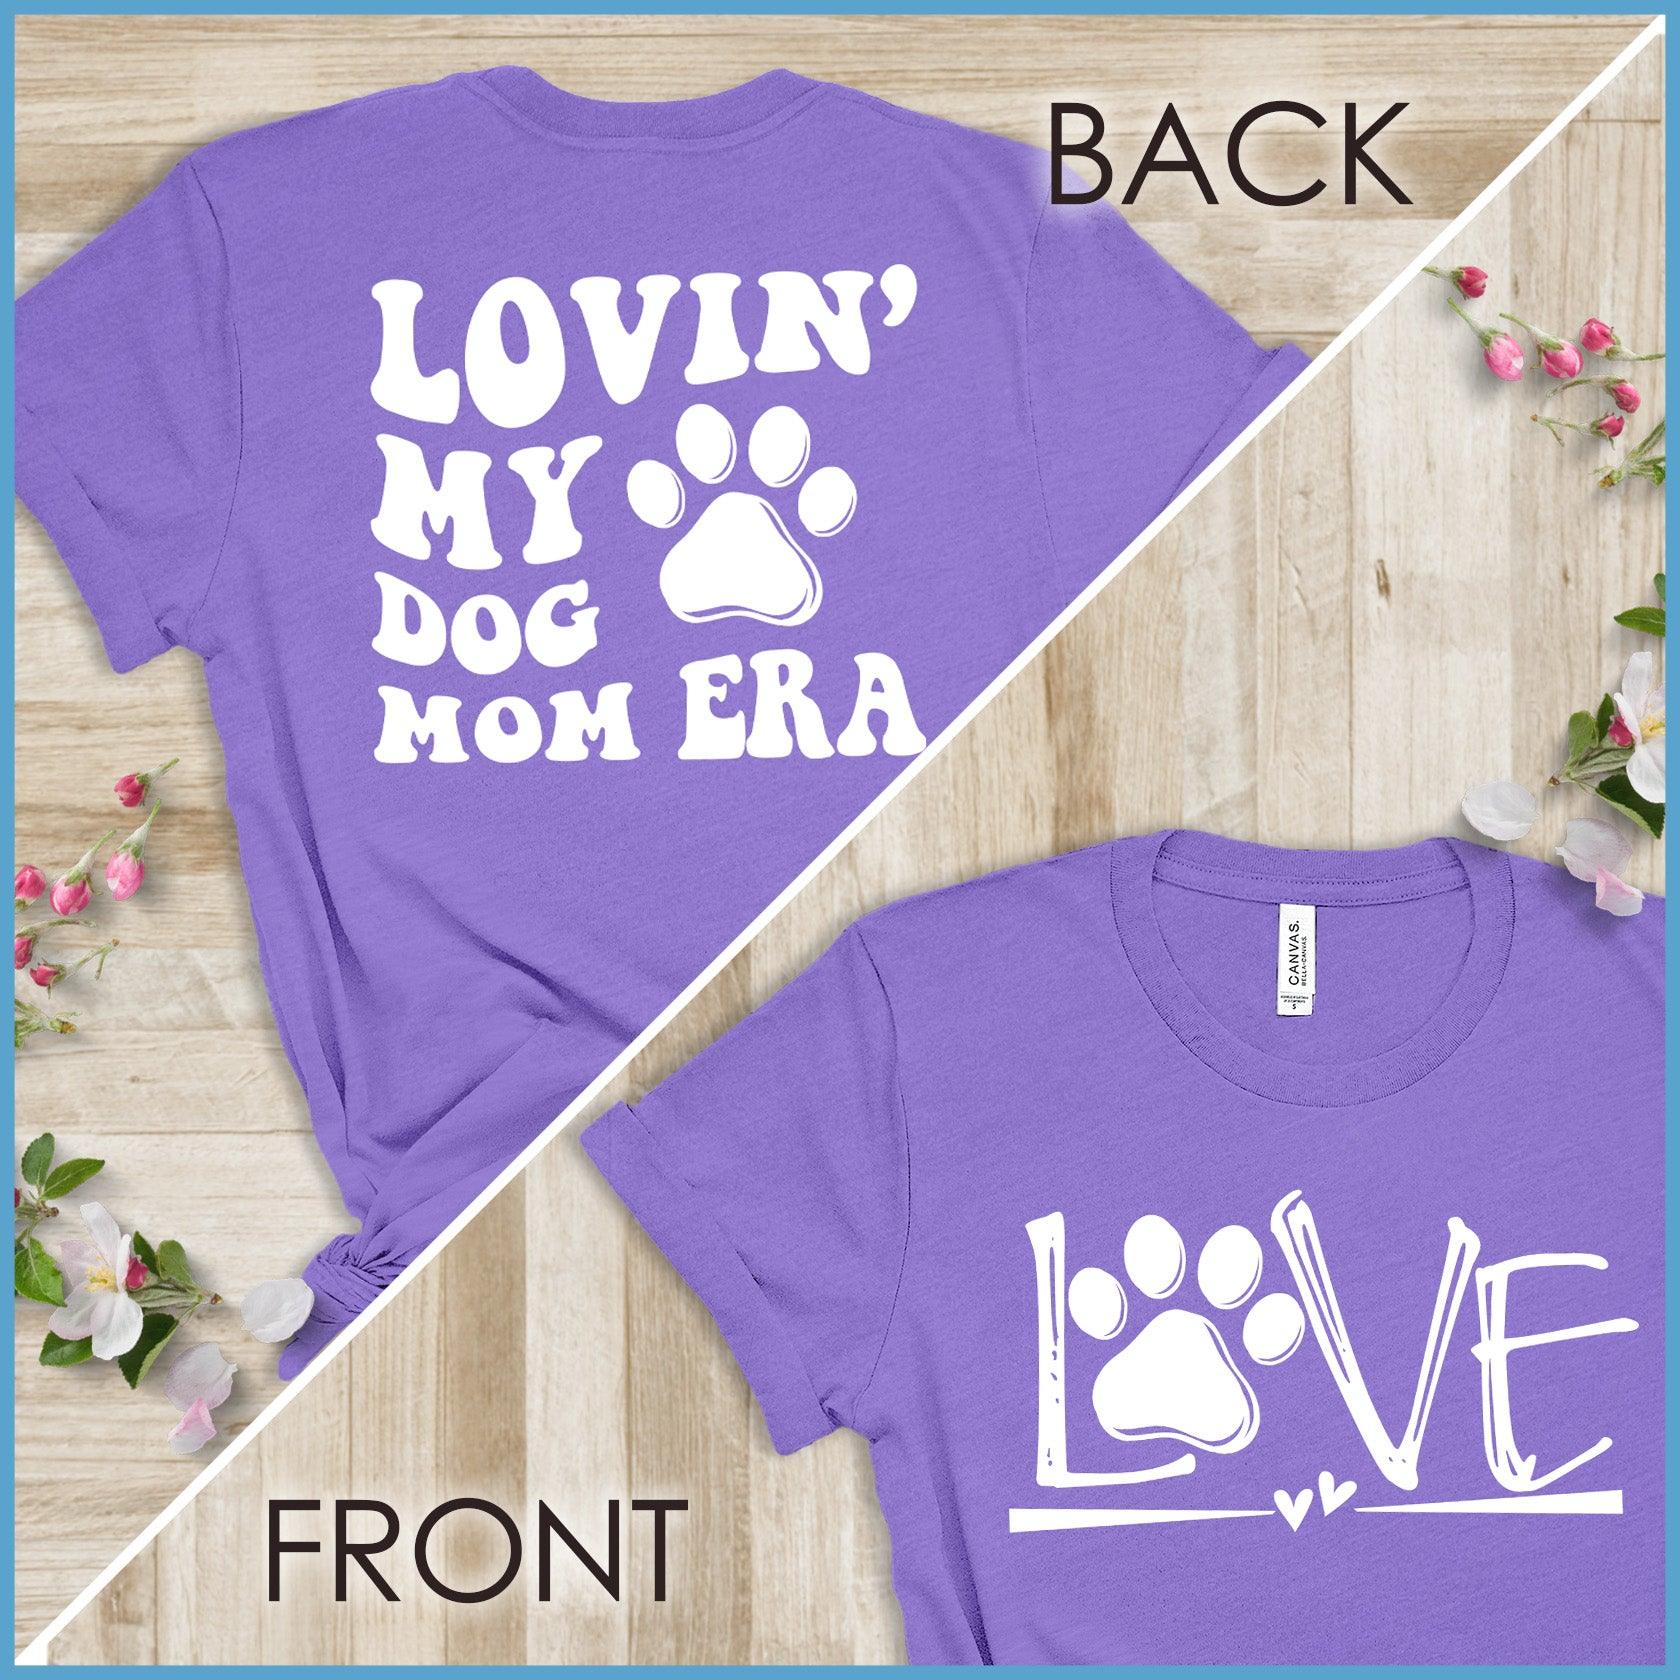 Lovin' My Dog Mom Era, Dog Love - Wavy T-Shirt Version 2 - Brooke & Belle